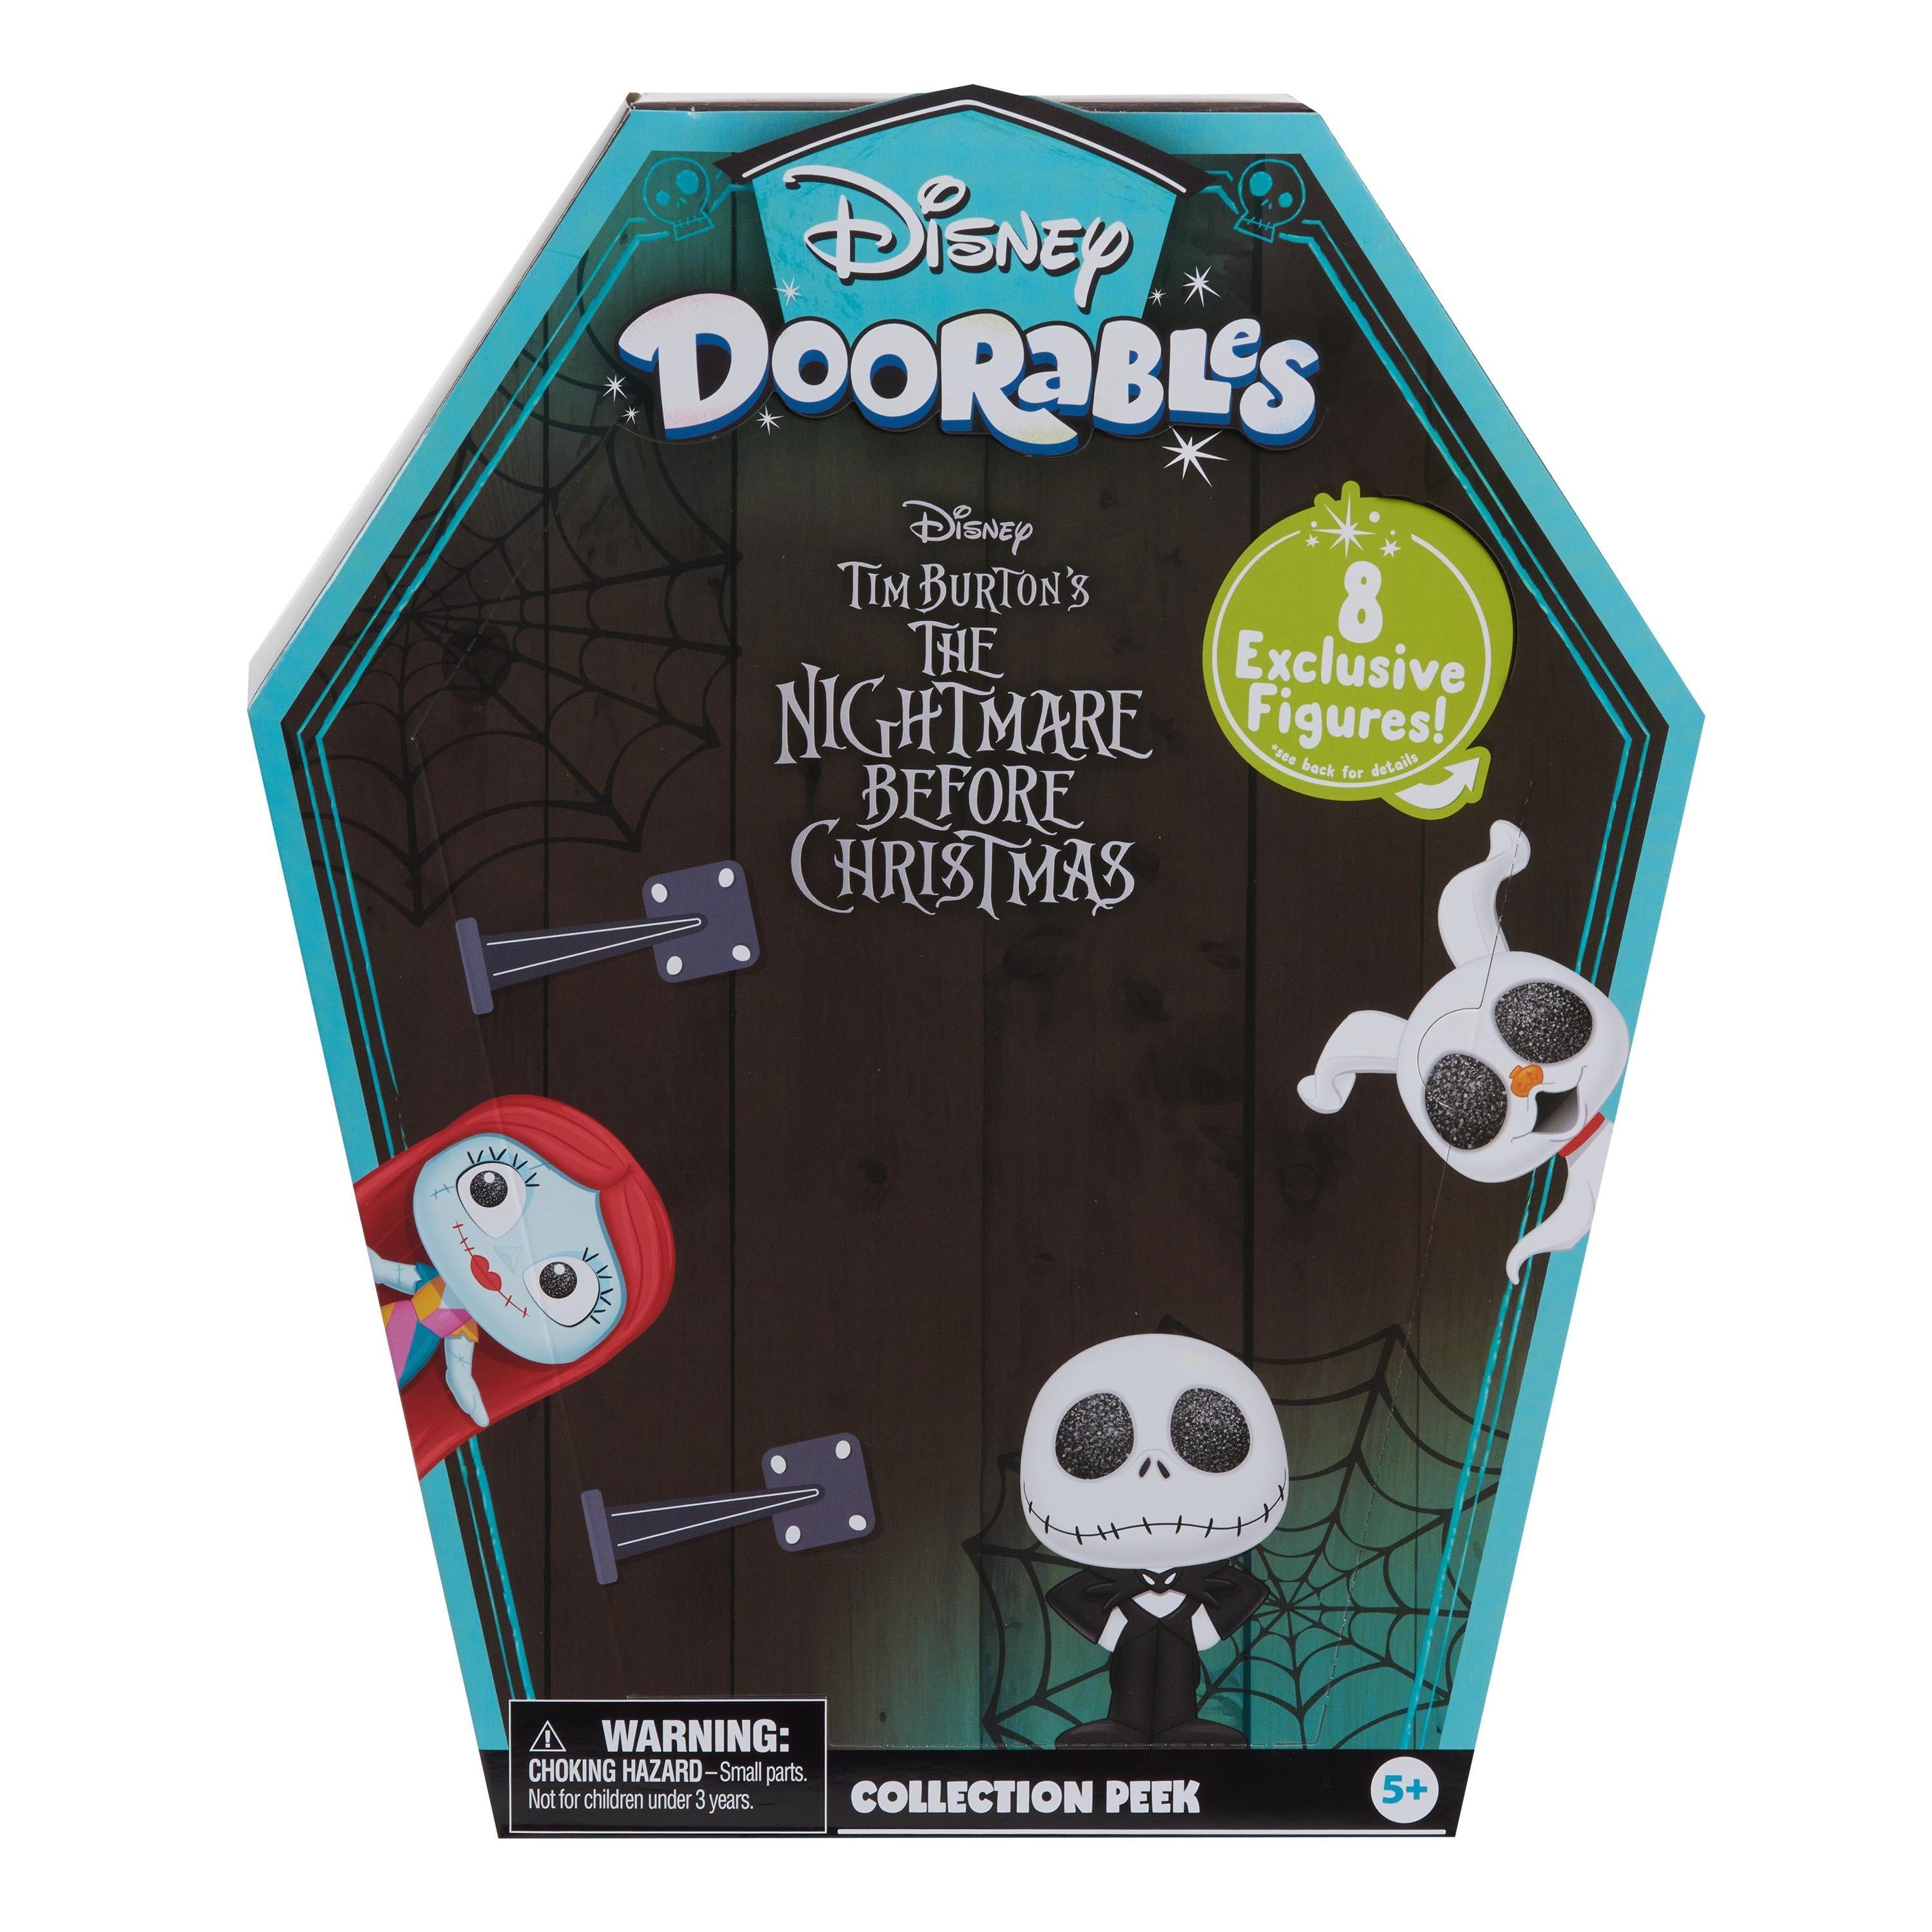 Disney Doorable series 5 mini peek - set of 2 boxes (2-3 figures per box)